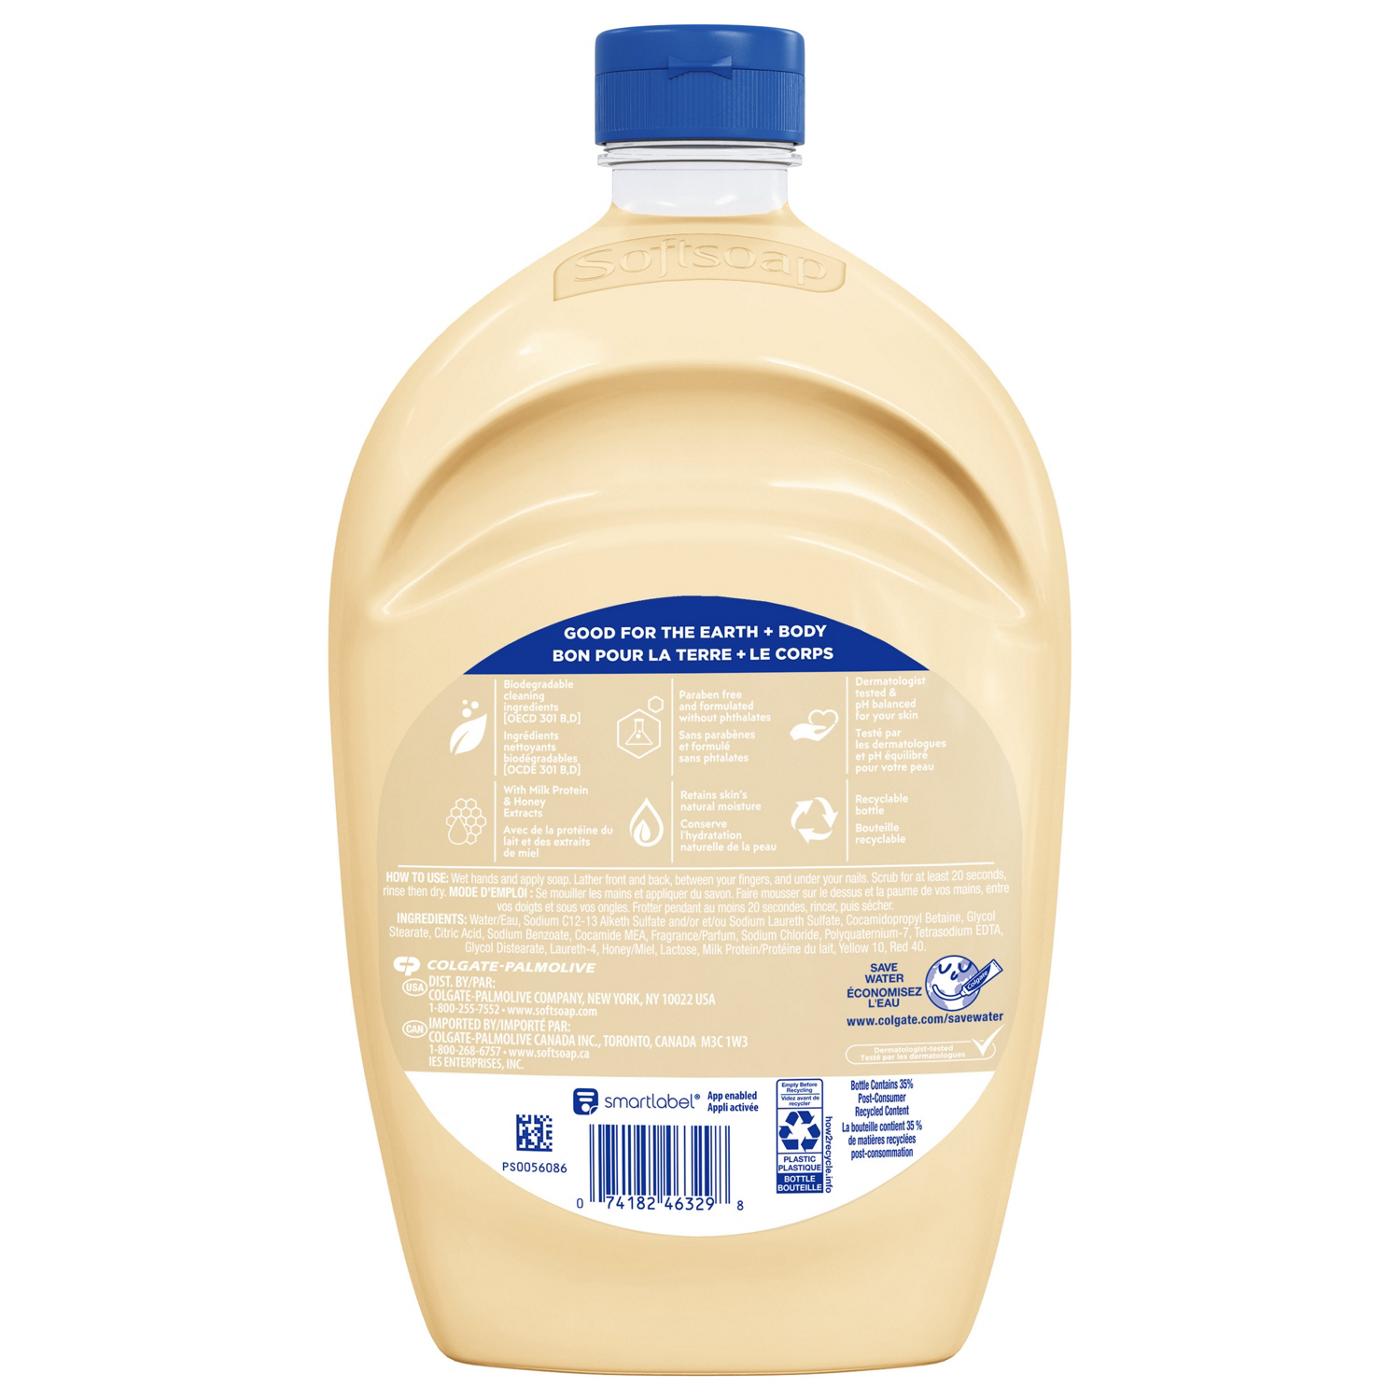 Softsoap Moisturizing Hand Soap Refill - Milk & Golden Honey; image 3 of 6